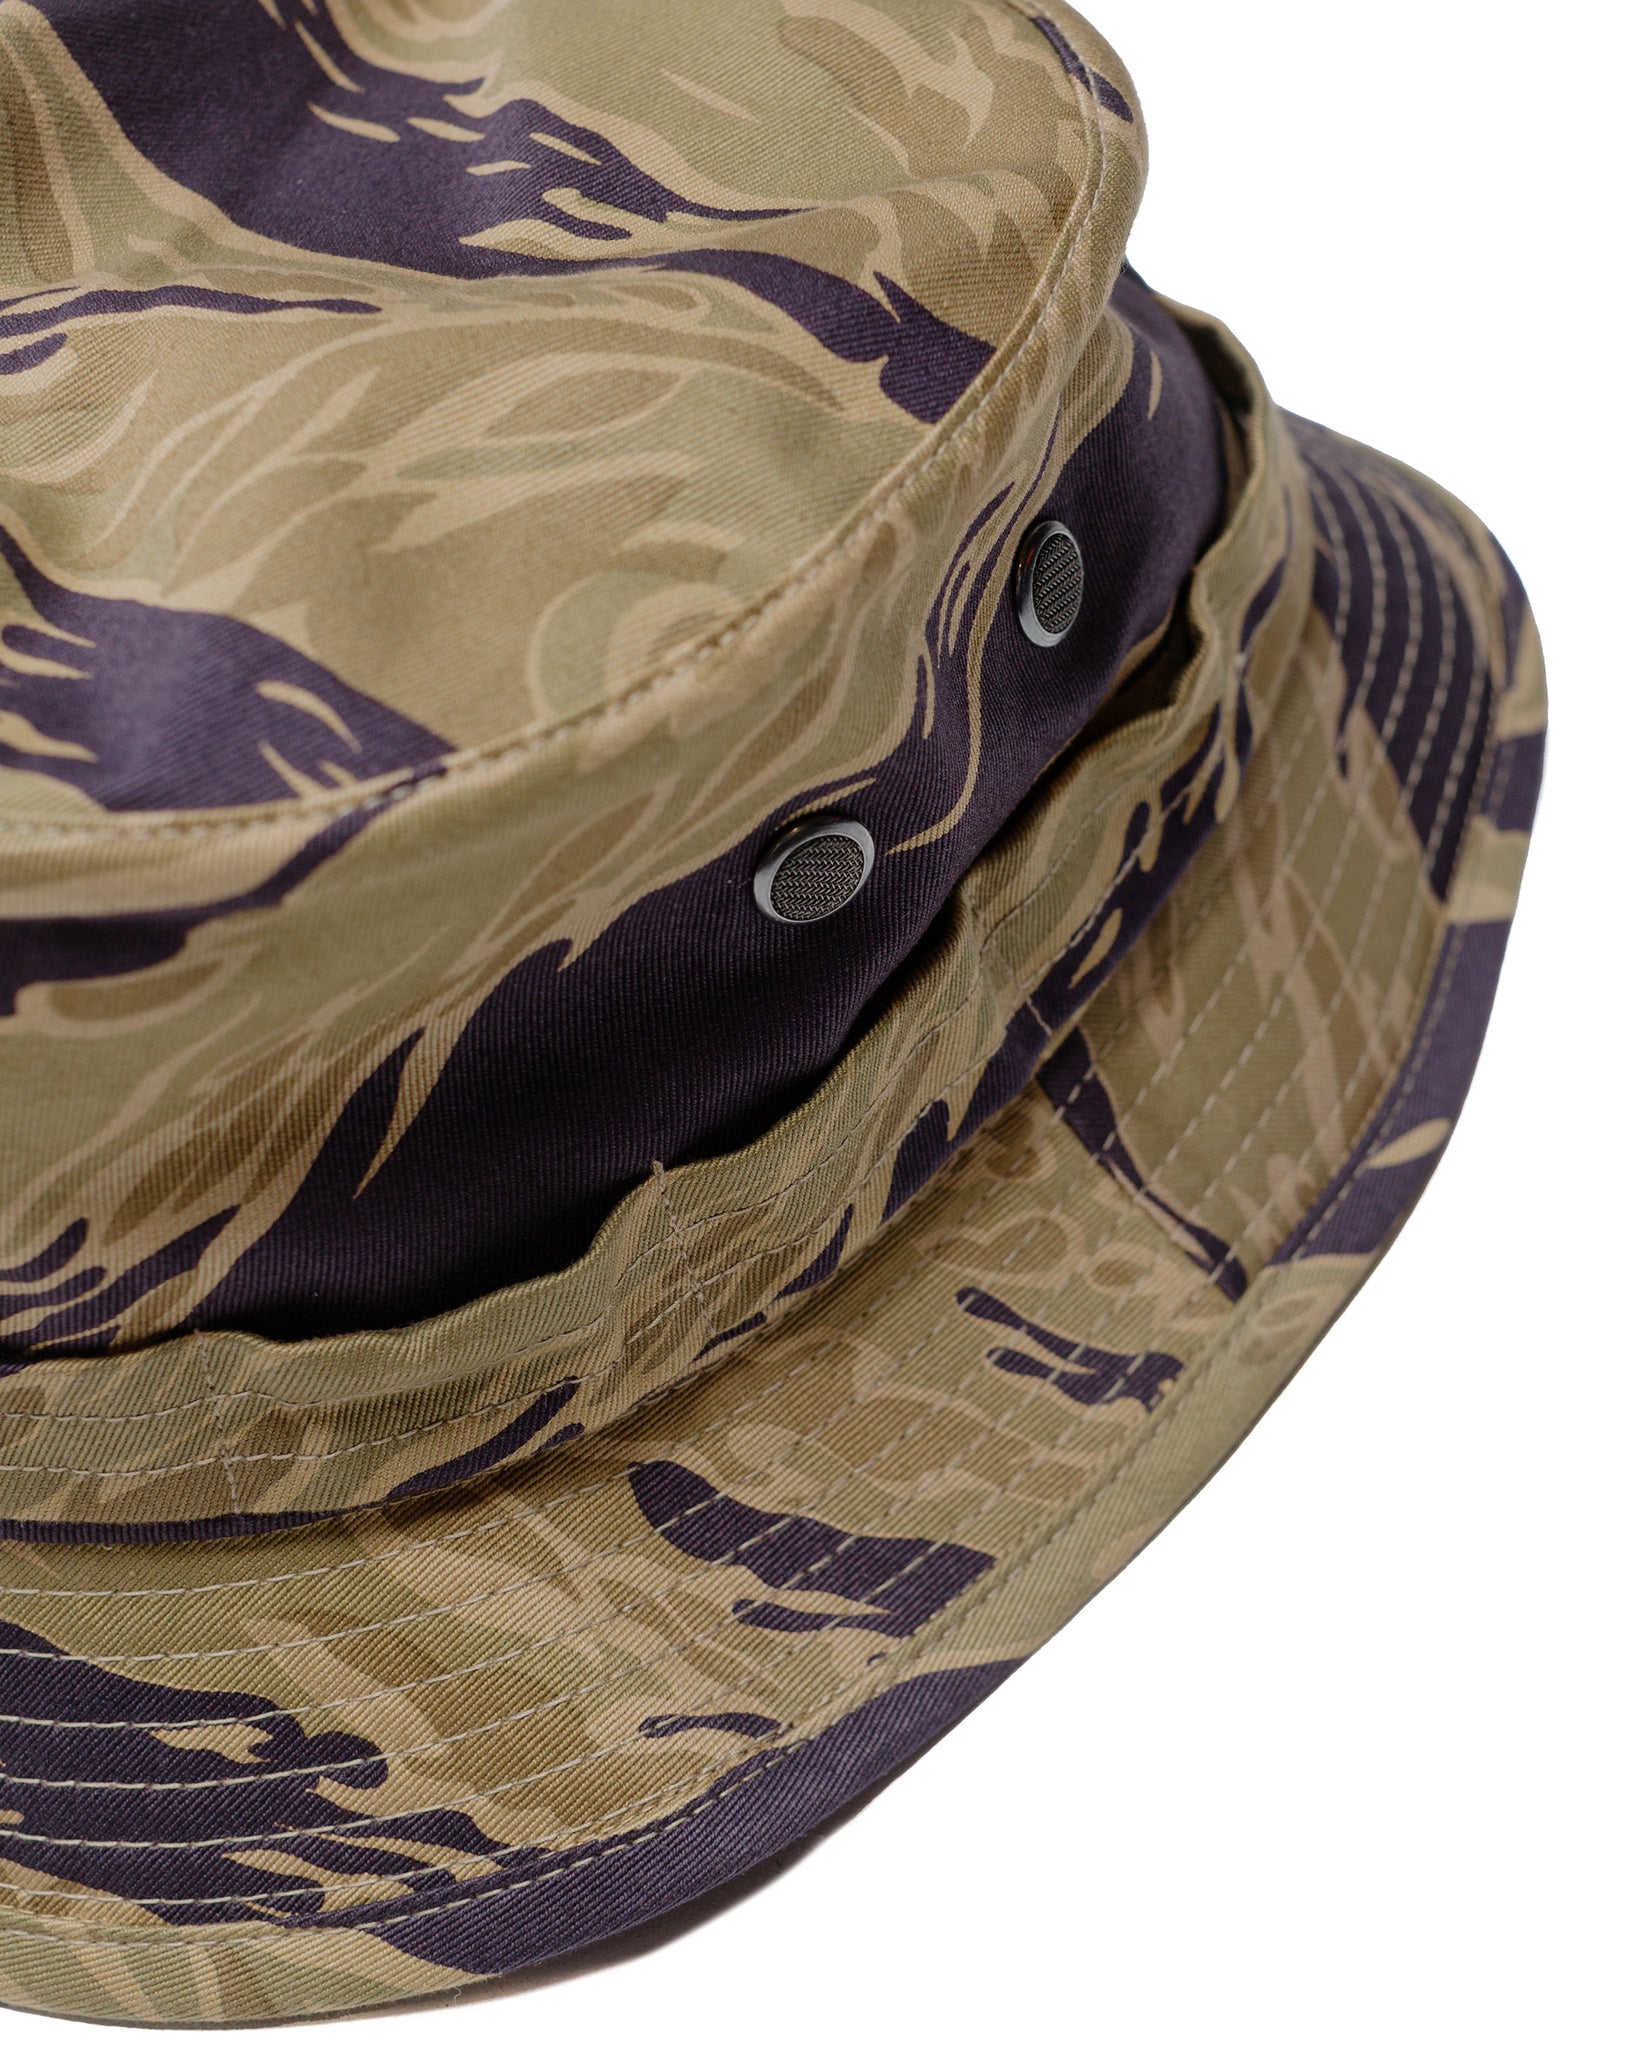 The Real McCoy's MA24003 Tiger Boonie Hat  Advisor Khaki fabric